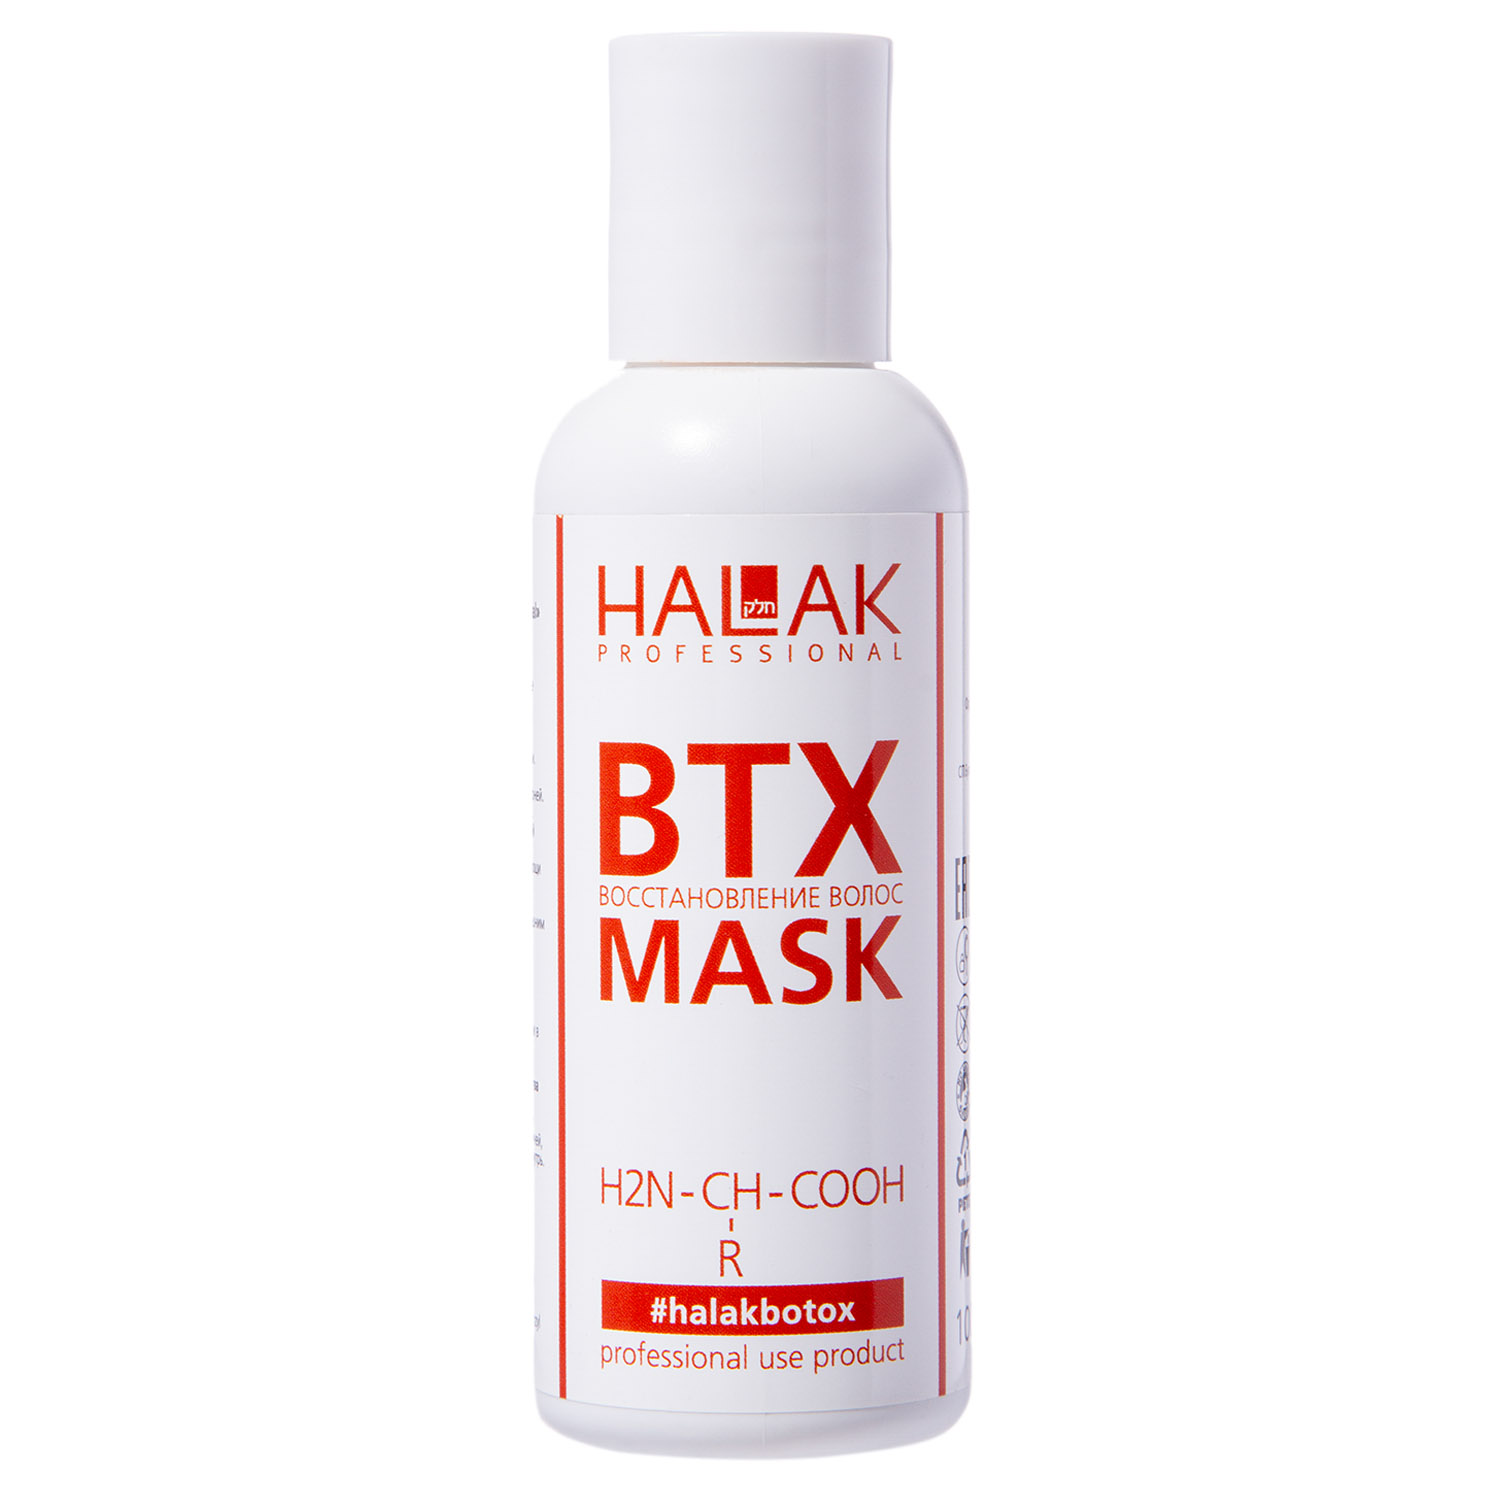 Halak Professional Маска для восстановления волос Hair Treatment, 100 мл (Halak Professional, BTX)